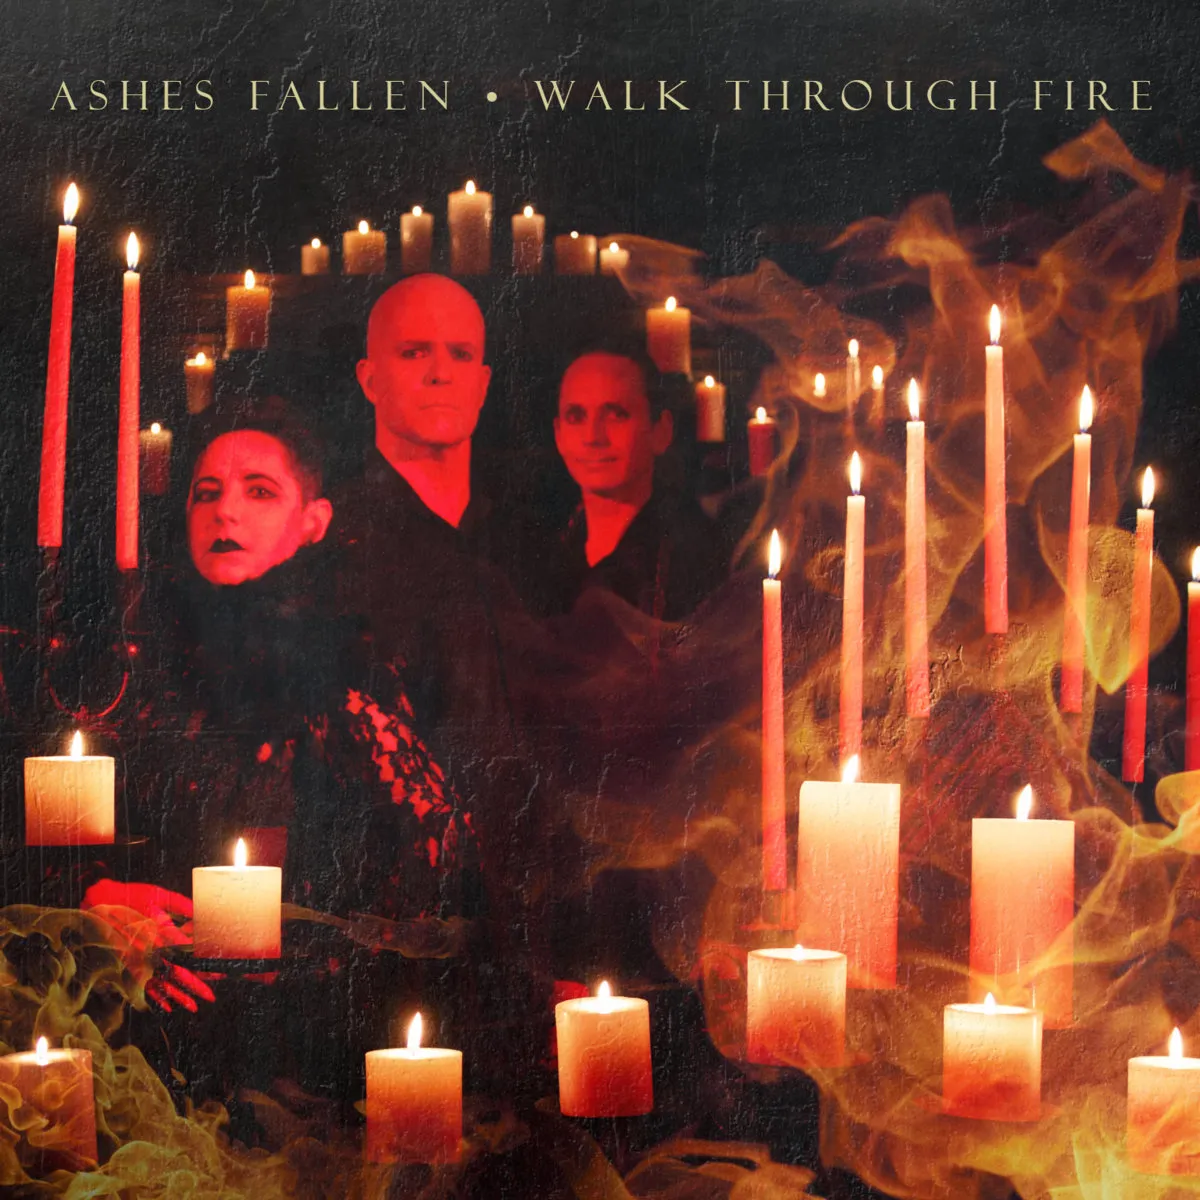 Album art courtesy of Ashes Fallen